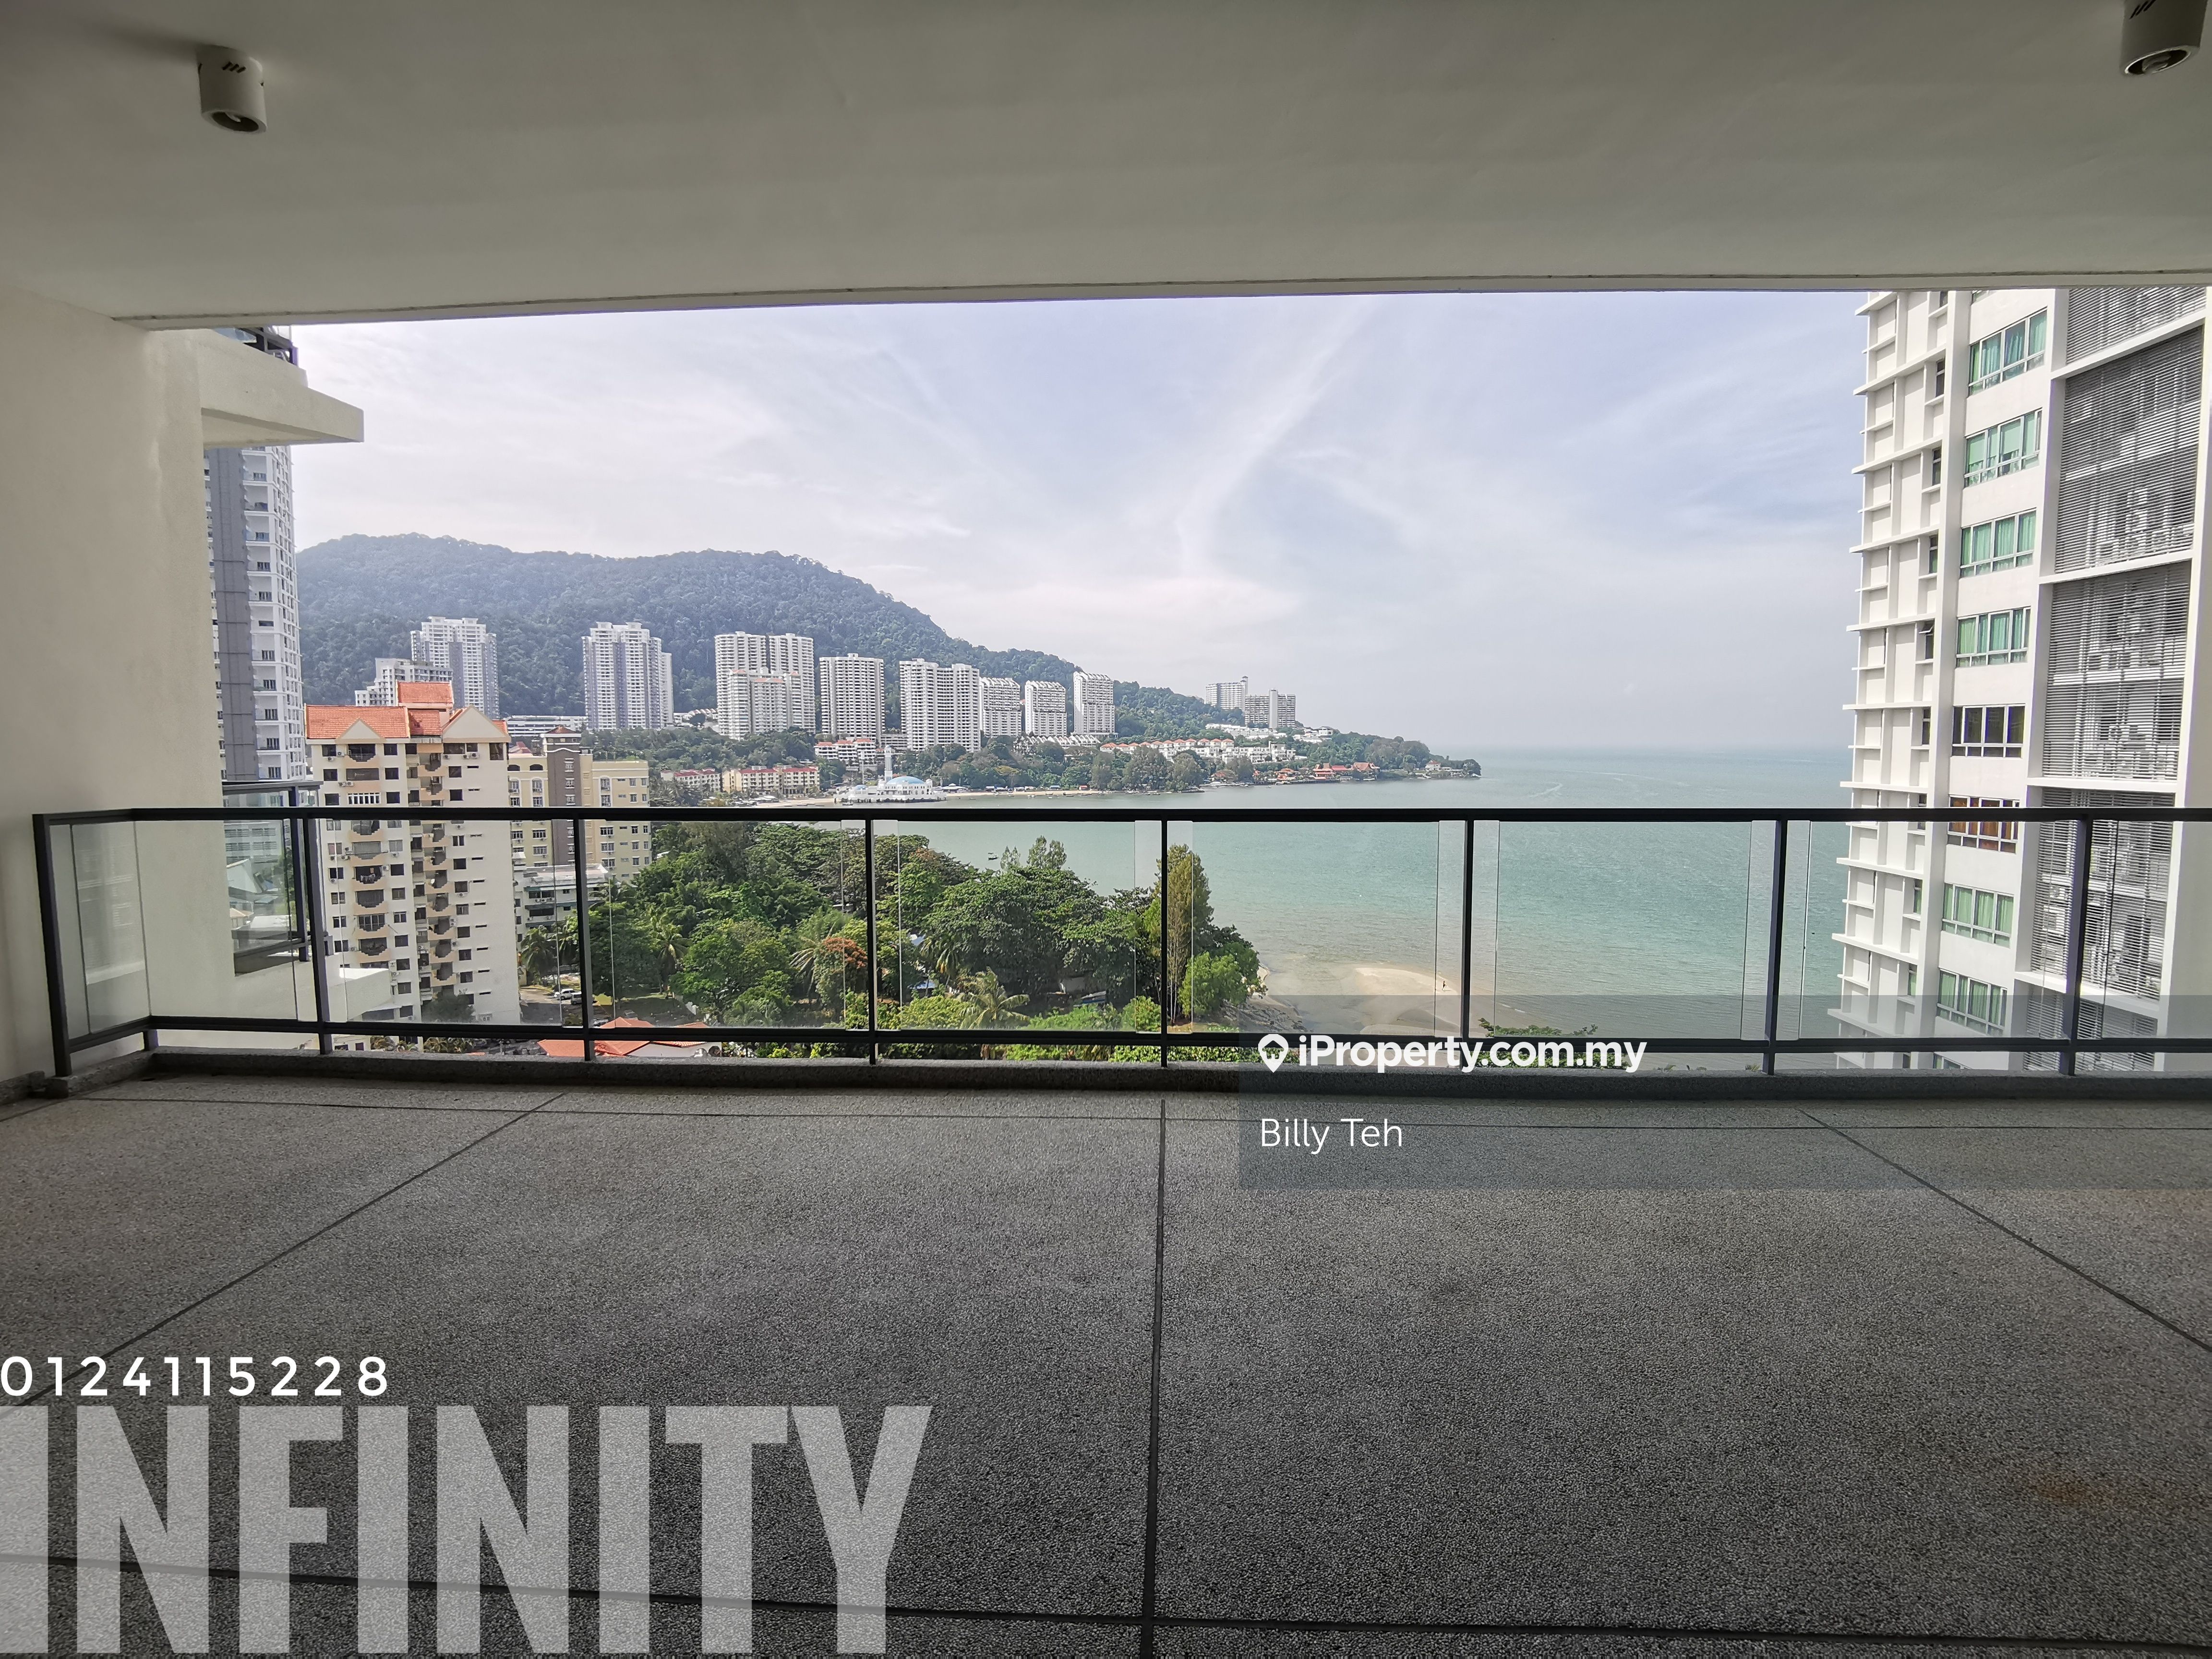 Infinity Beachfront Condominium, Tanjung Bungah